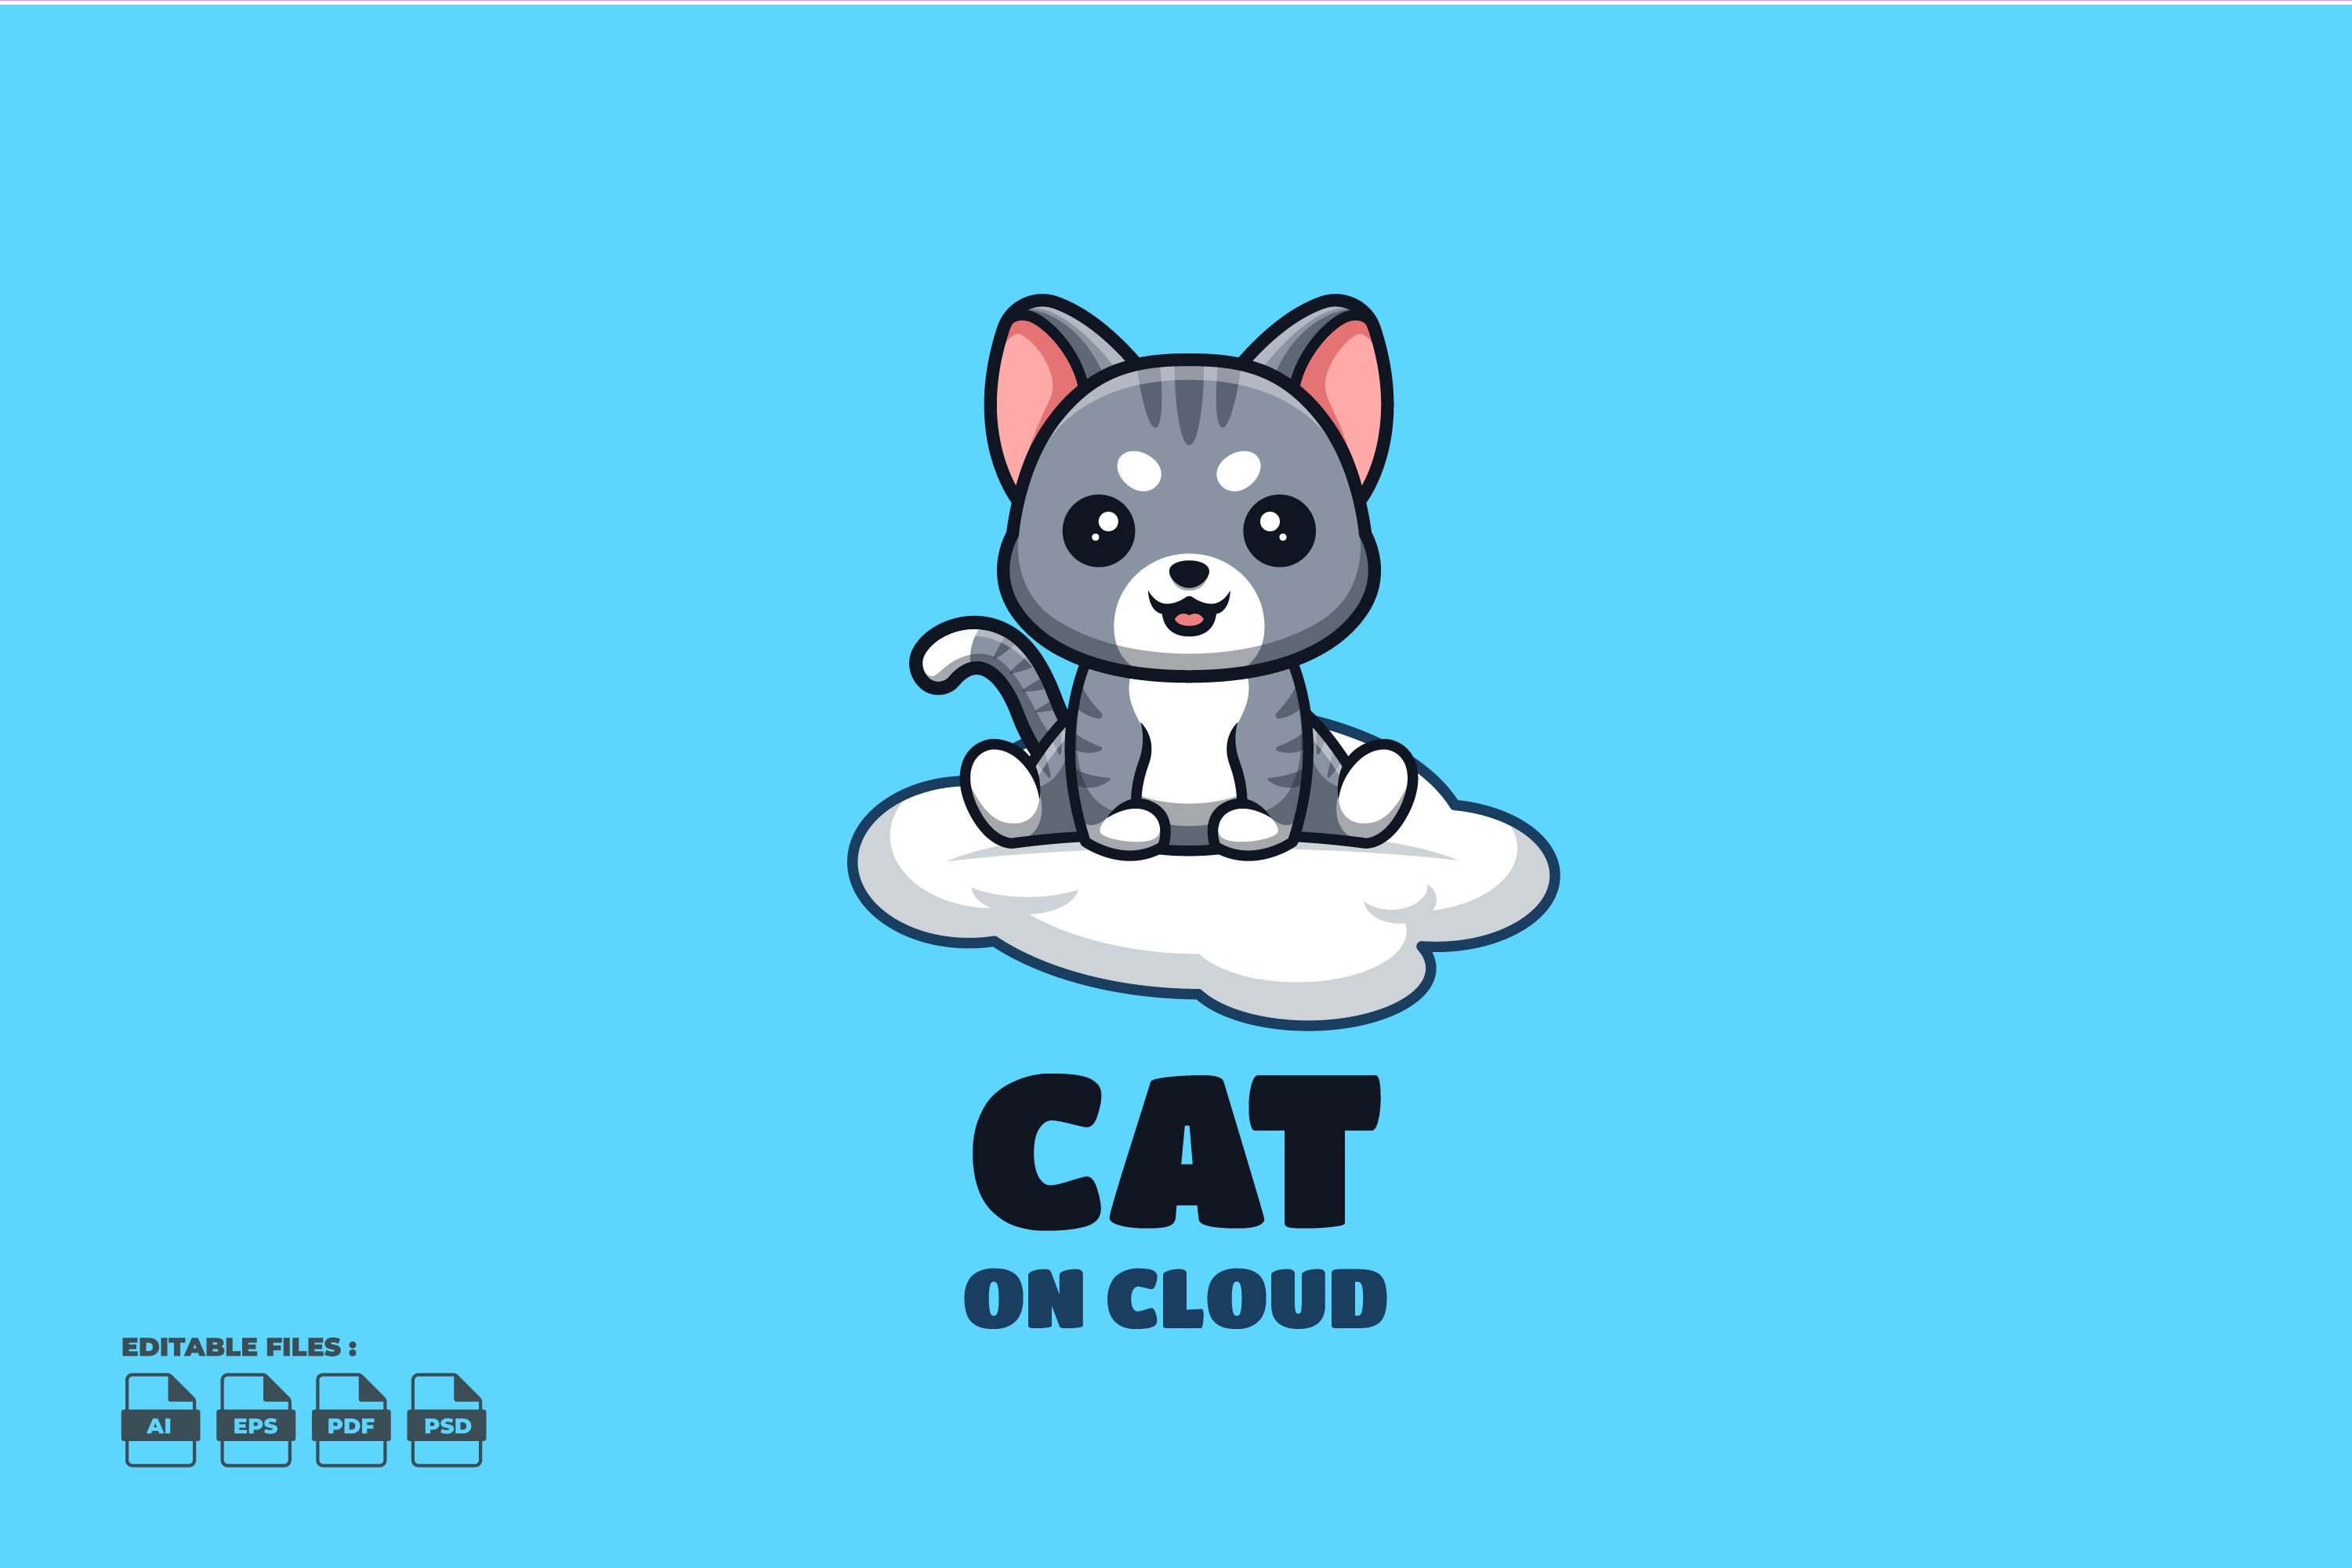 On Cloud Domestic Cat Cute Mascot Lo cover image.